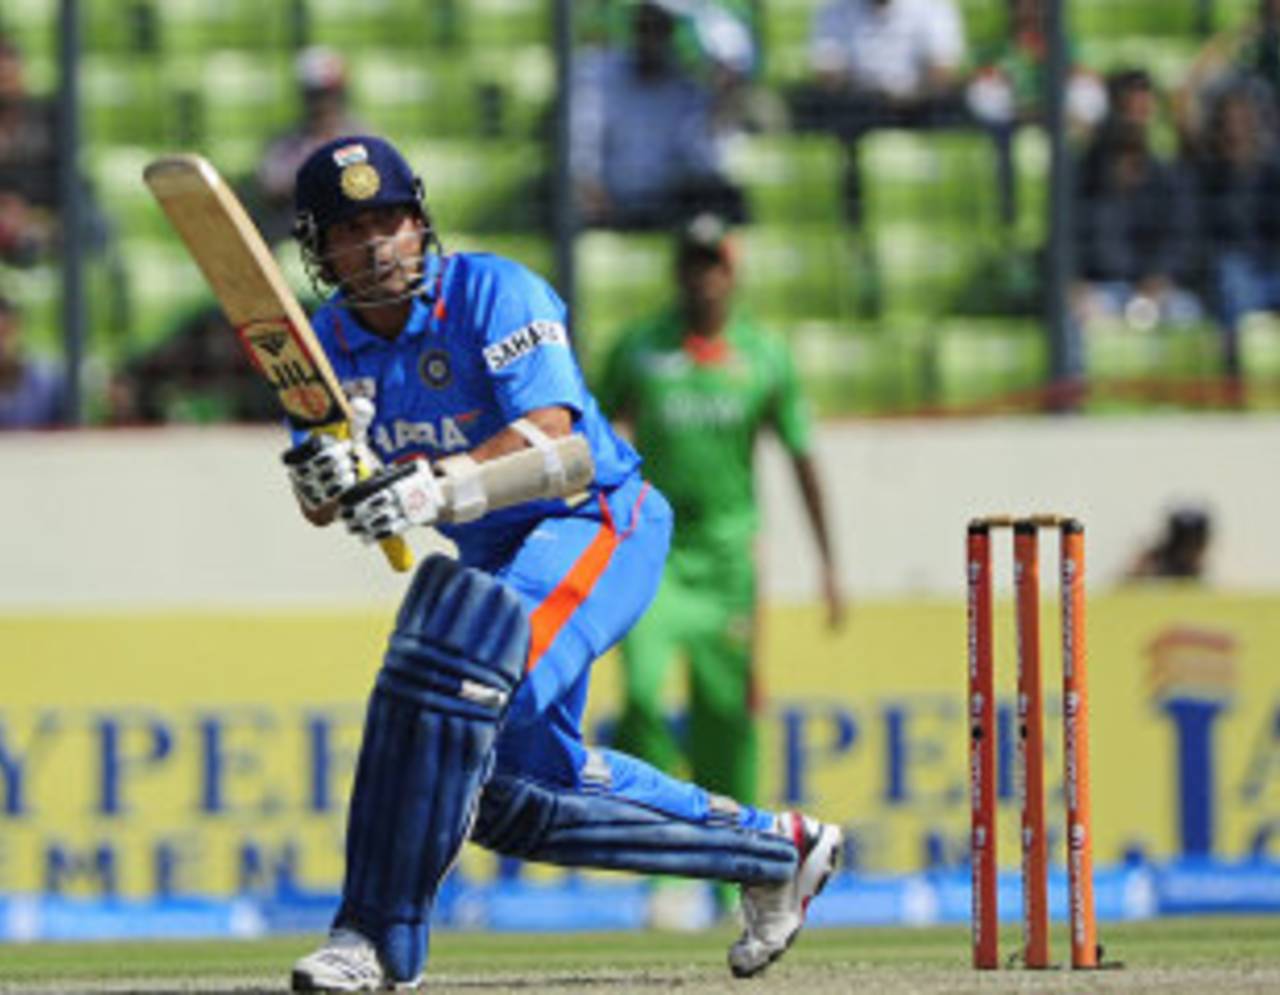 Sachin Tendulkar flicks one away, Bangladesh v India, Asia Cup, Mirpur, March 16, 2012